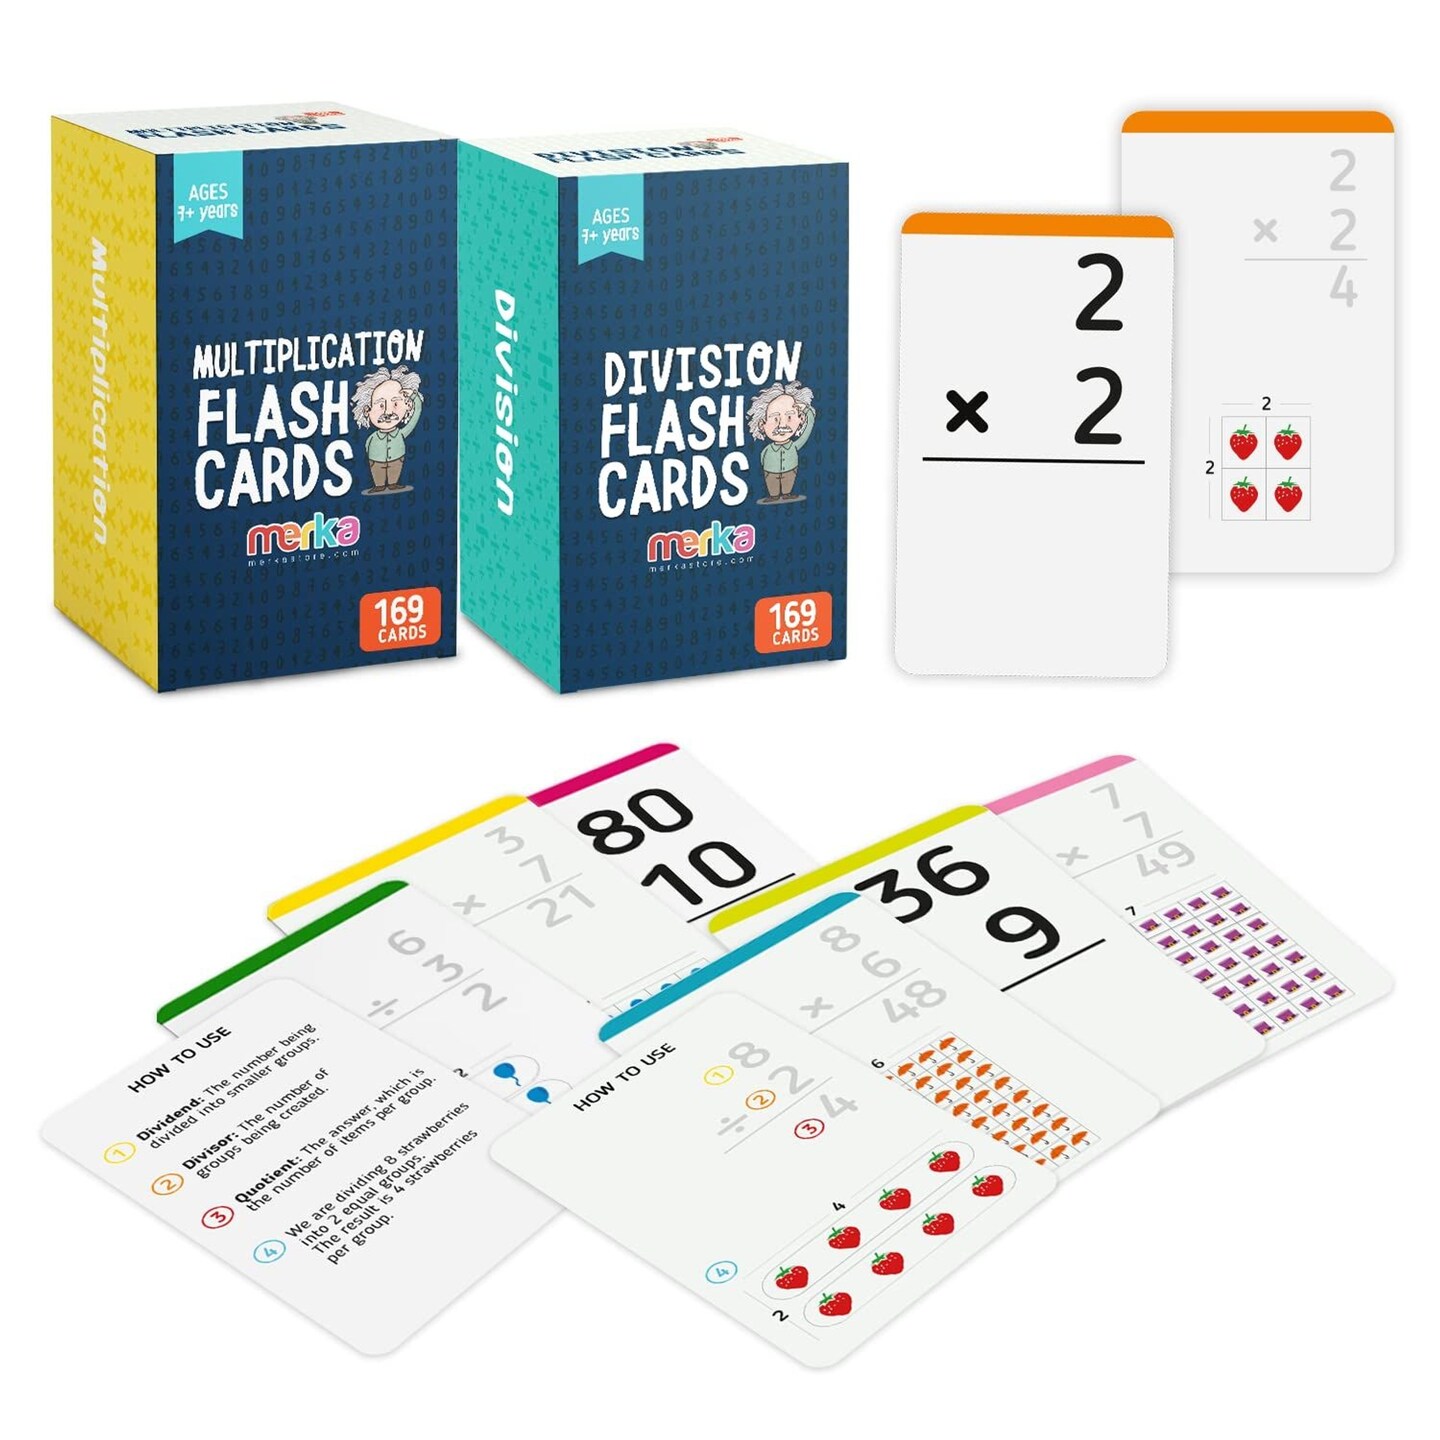 merka Multiplication Flash Cards Math flash Cards Multiplication And Division Flash Cards Multiplication Flashcards 3rd grade 2 Sets With 169 Cards Each